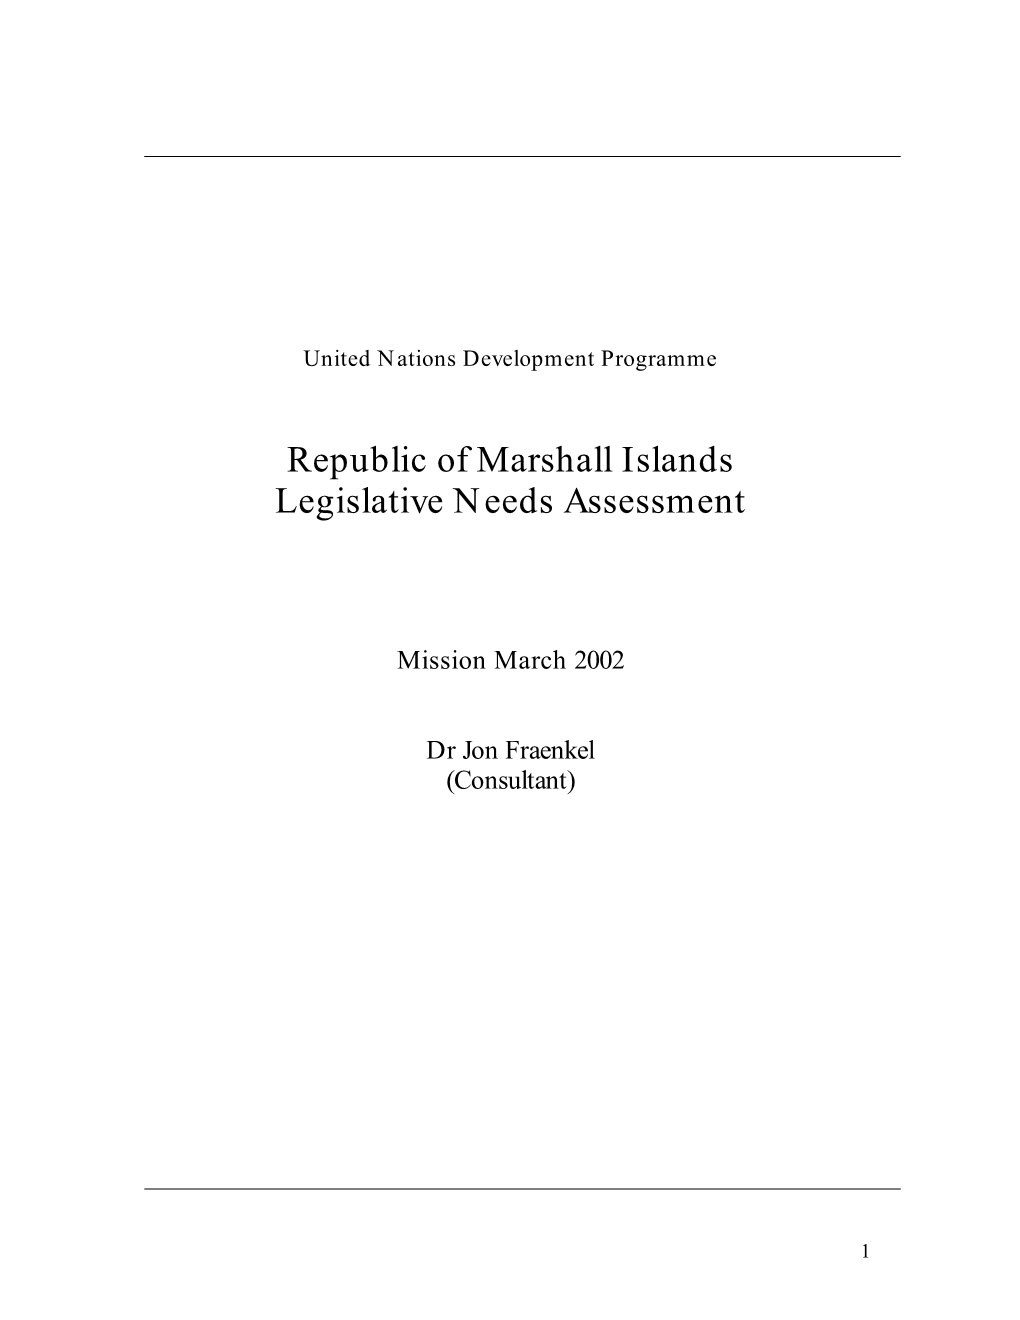 Marshall Islands Legislative Needs Assessment